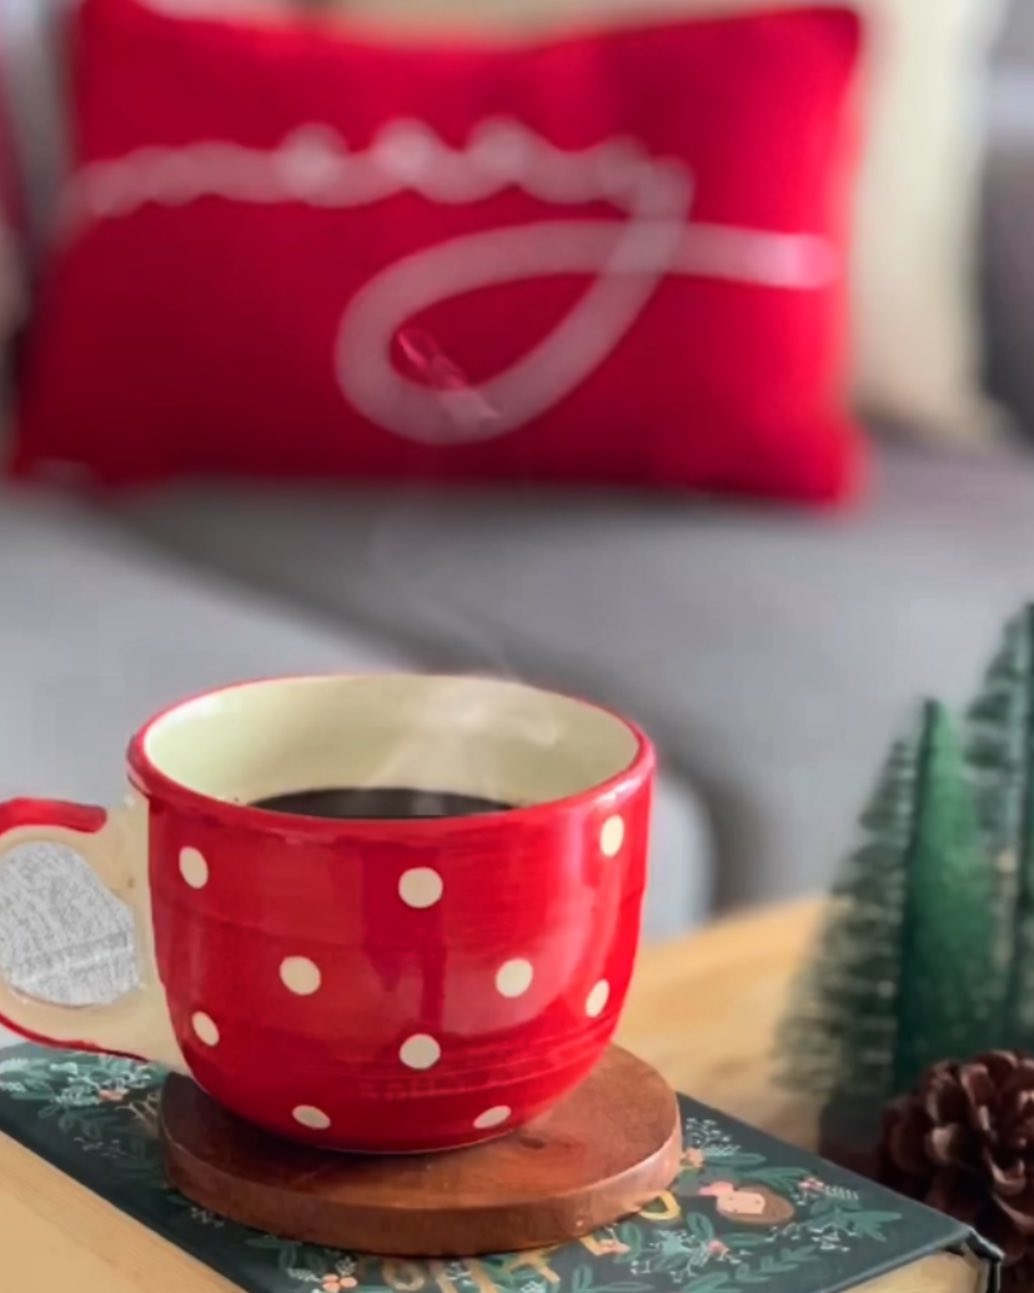 Red and white mug with black tea